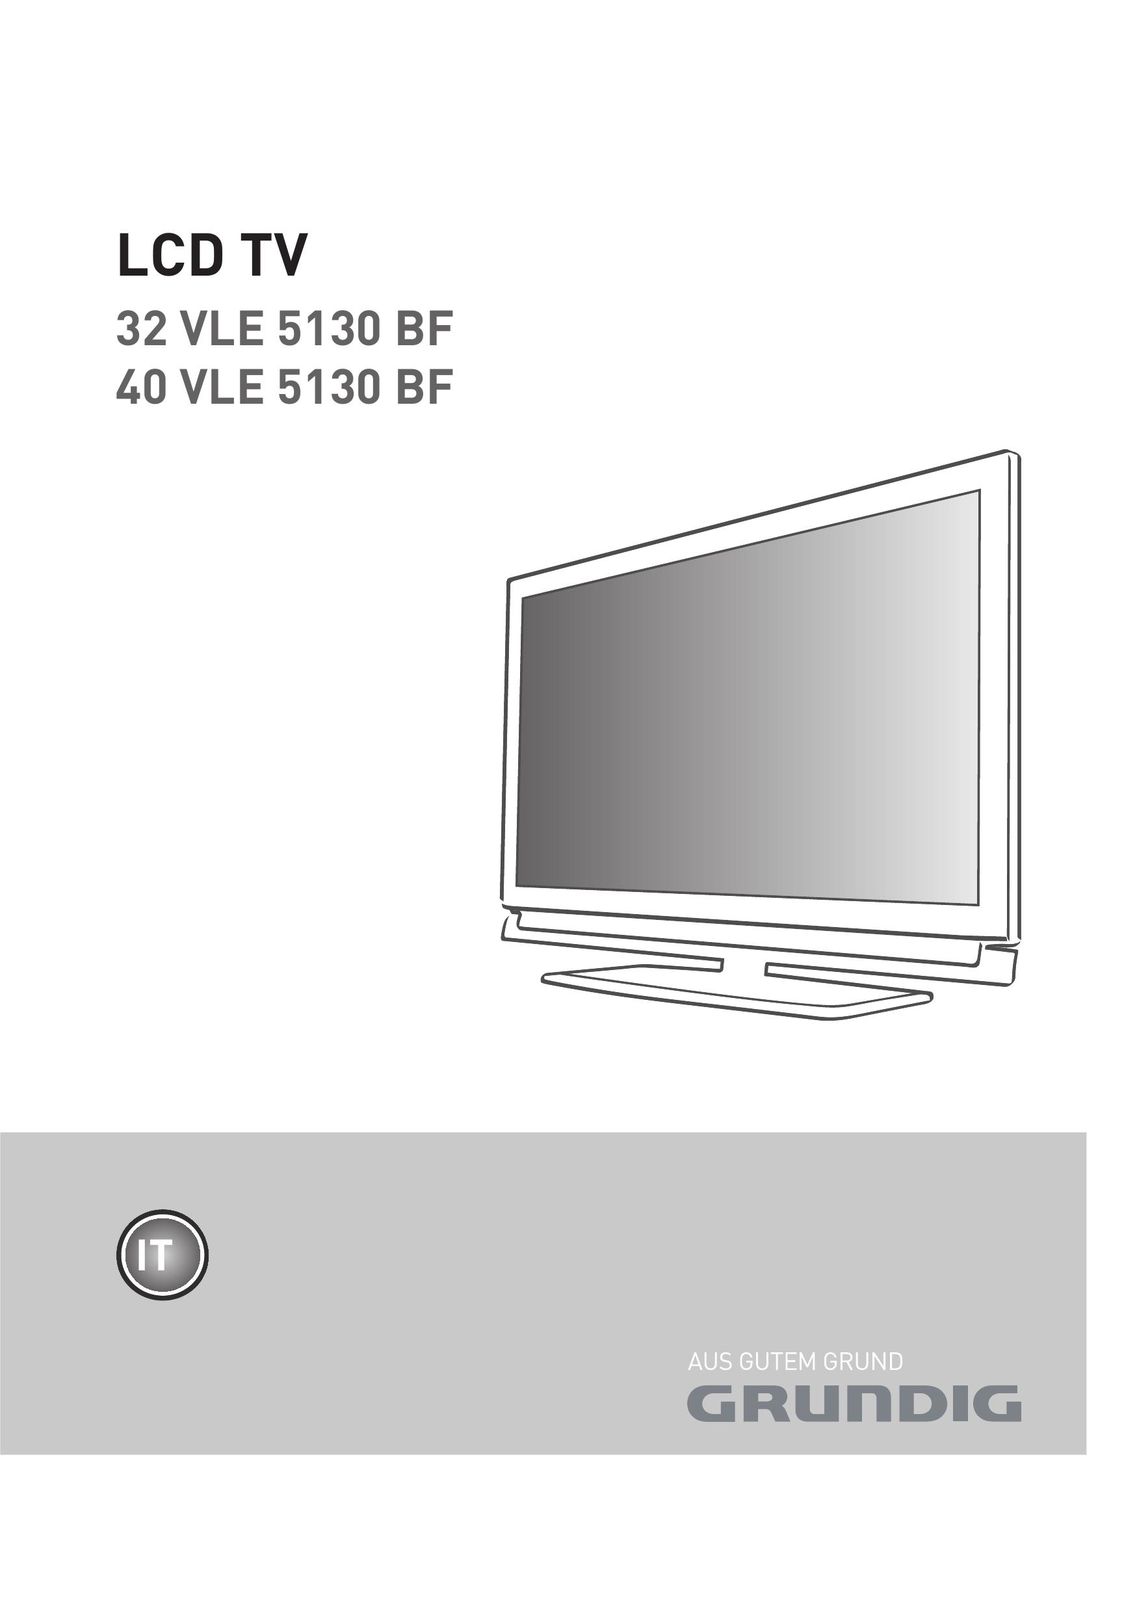 Grundig 32 VLE 4130 BF Flat Panel Television User Manual